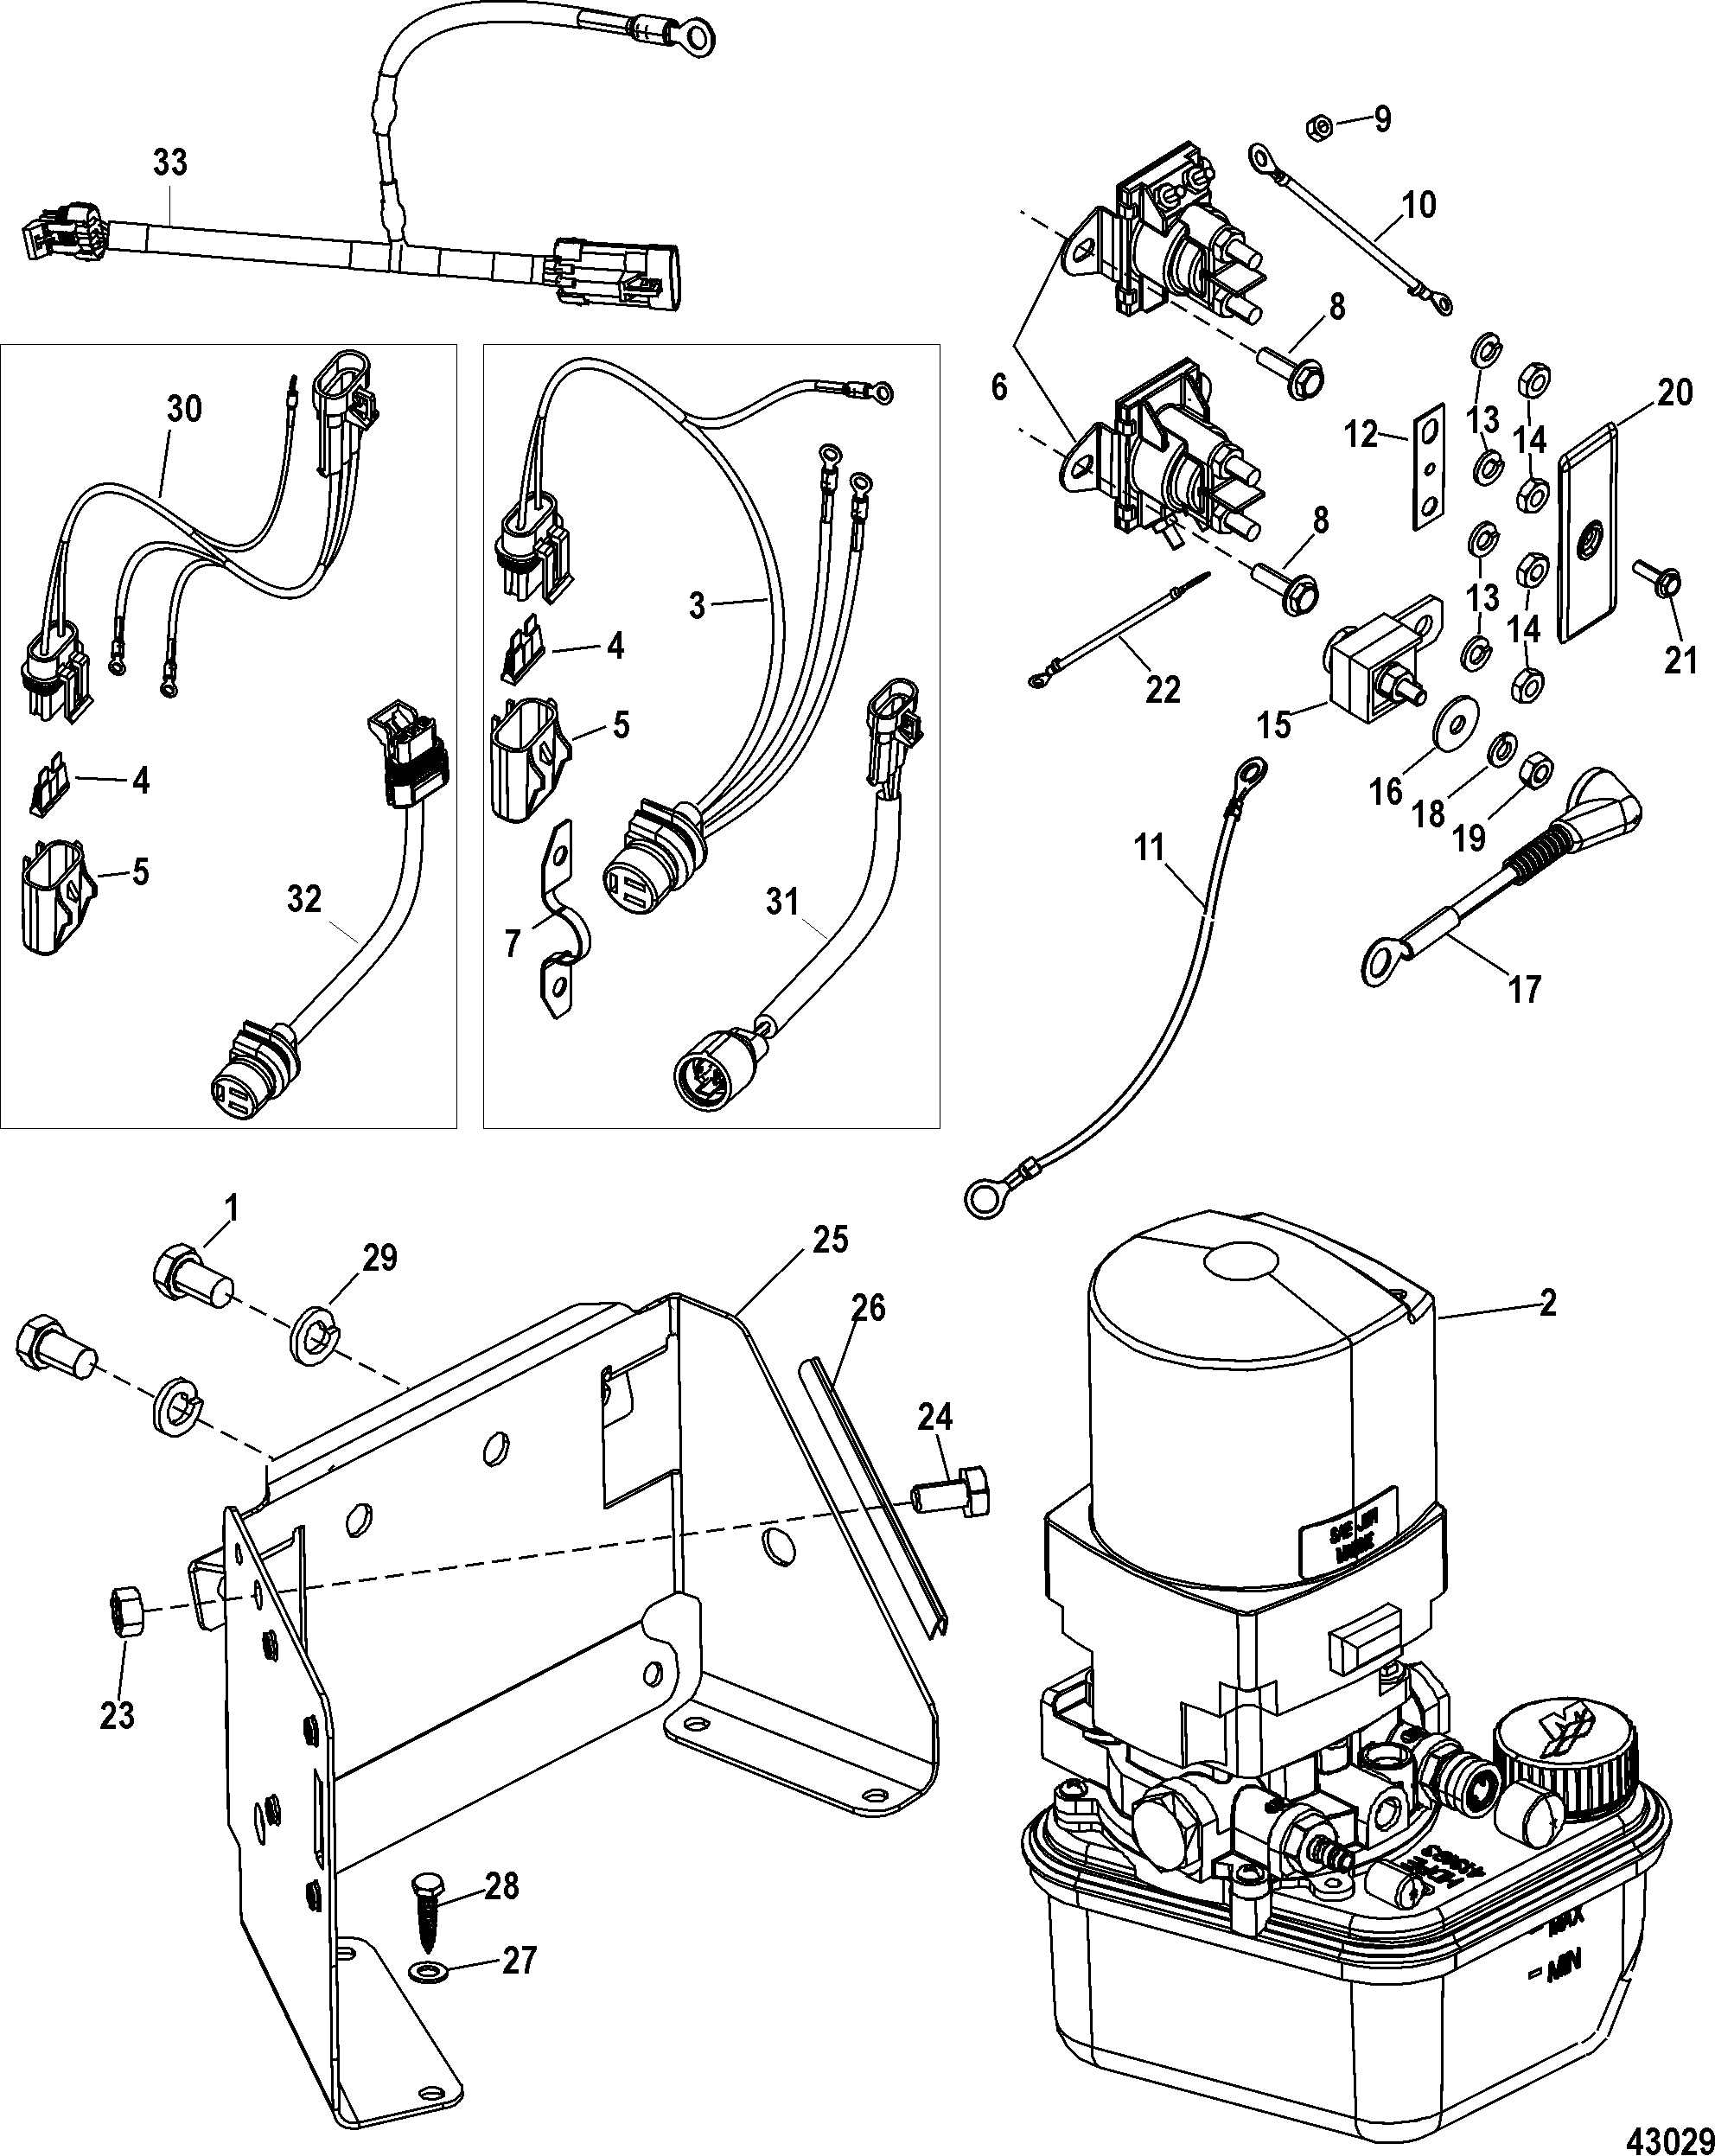 Trim Pump Assembly(Complete)